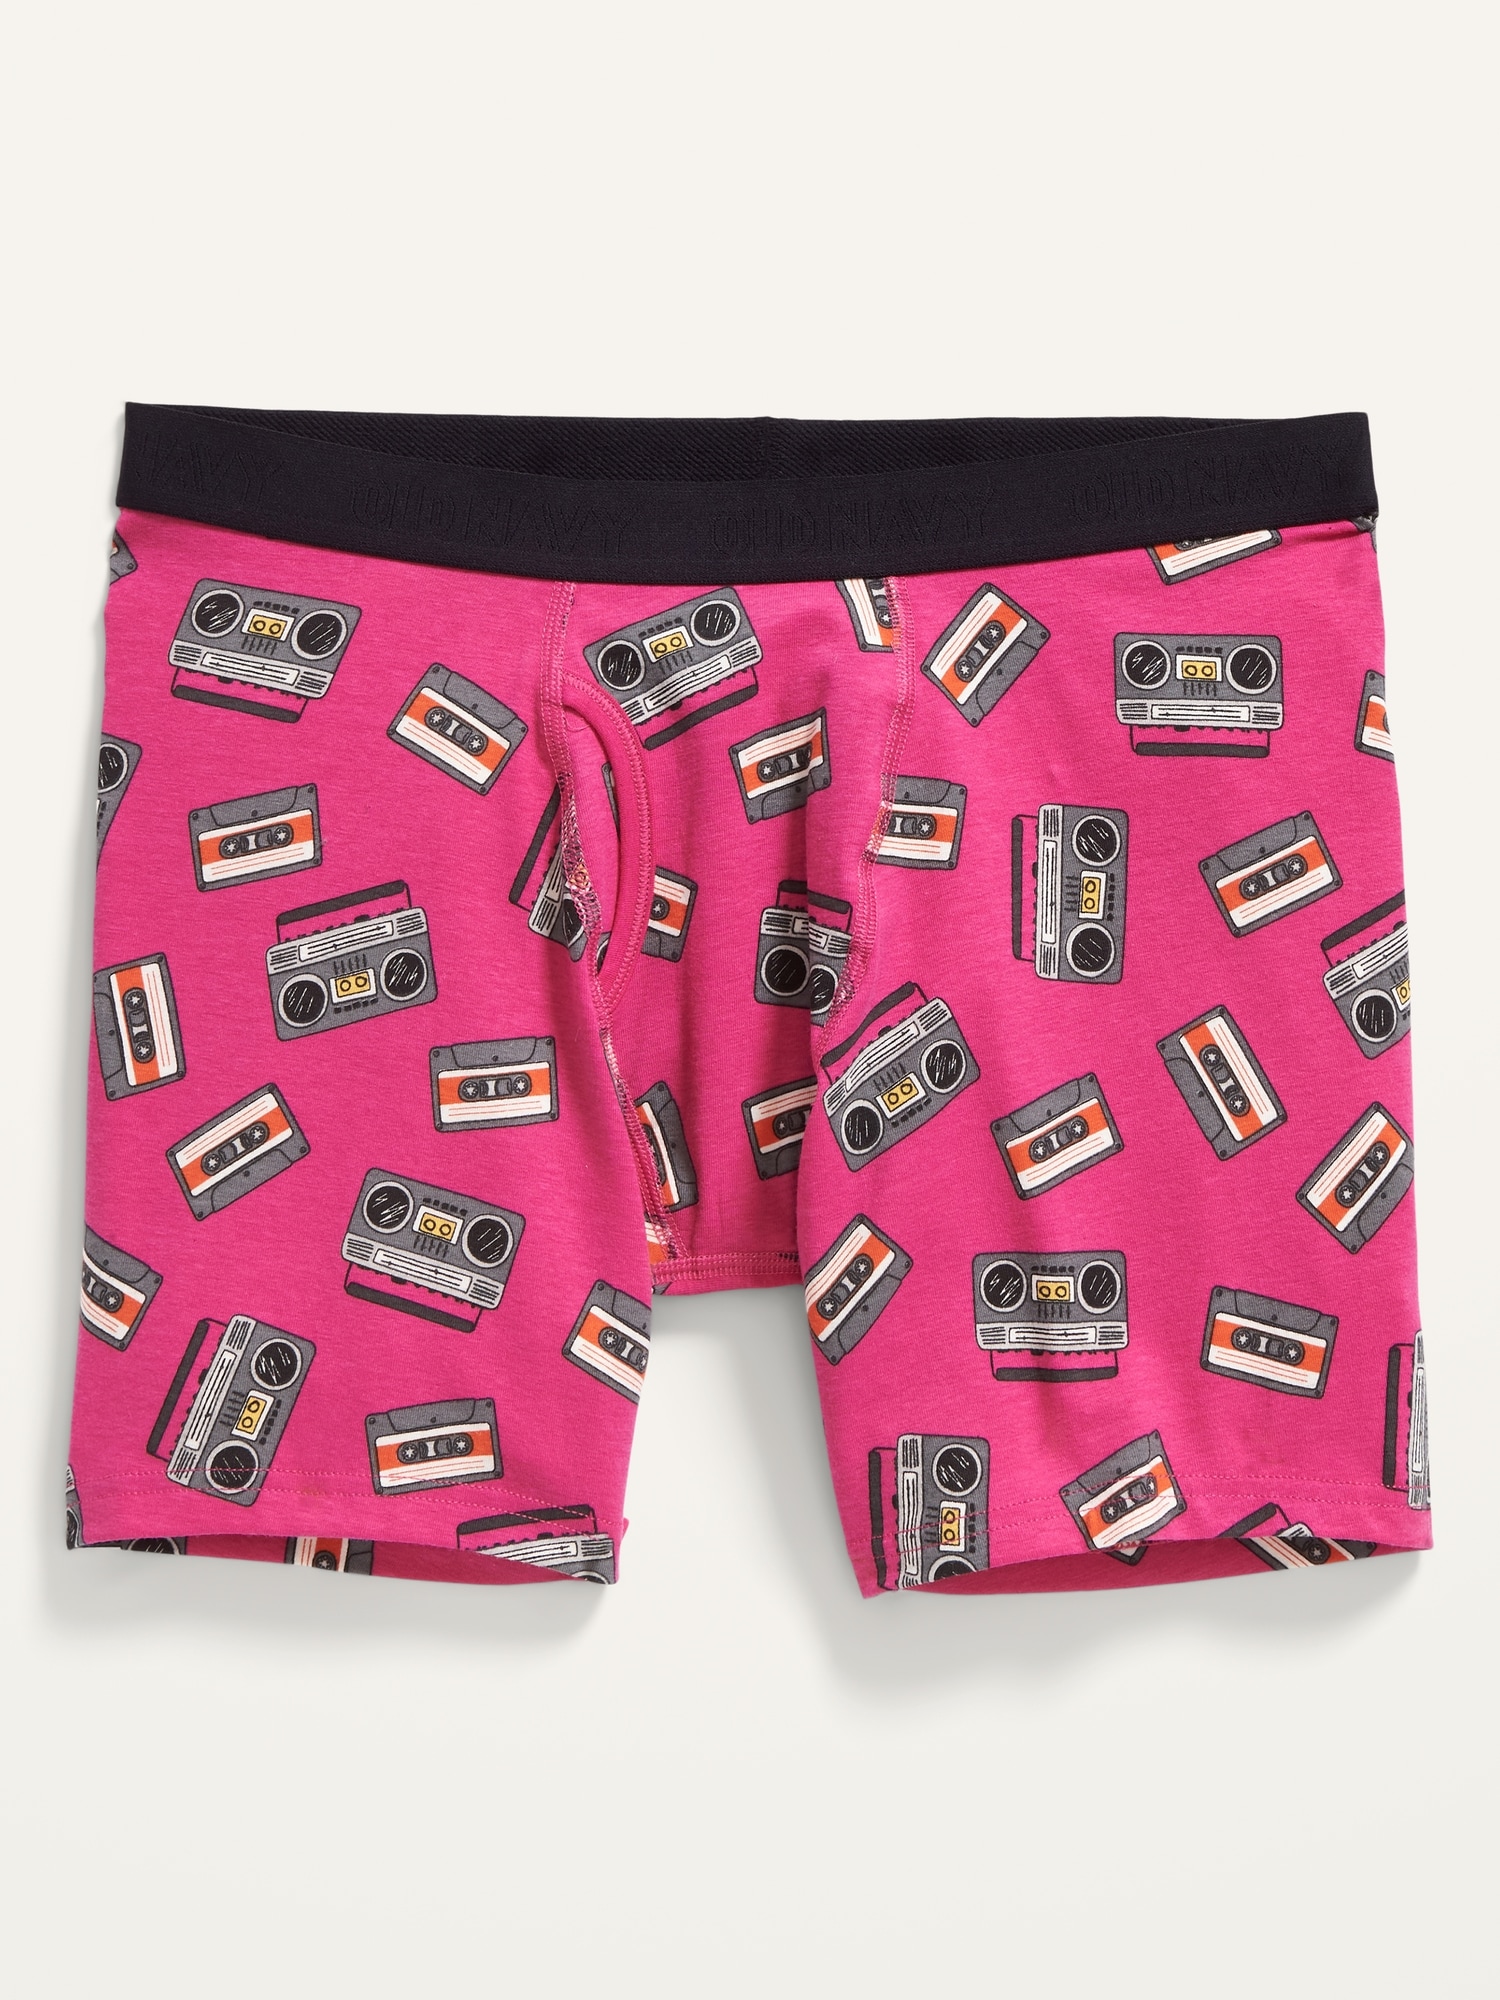 Soft-Washed Built-In Flex Printed Boxer-Brief Underwear for Men